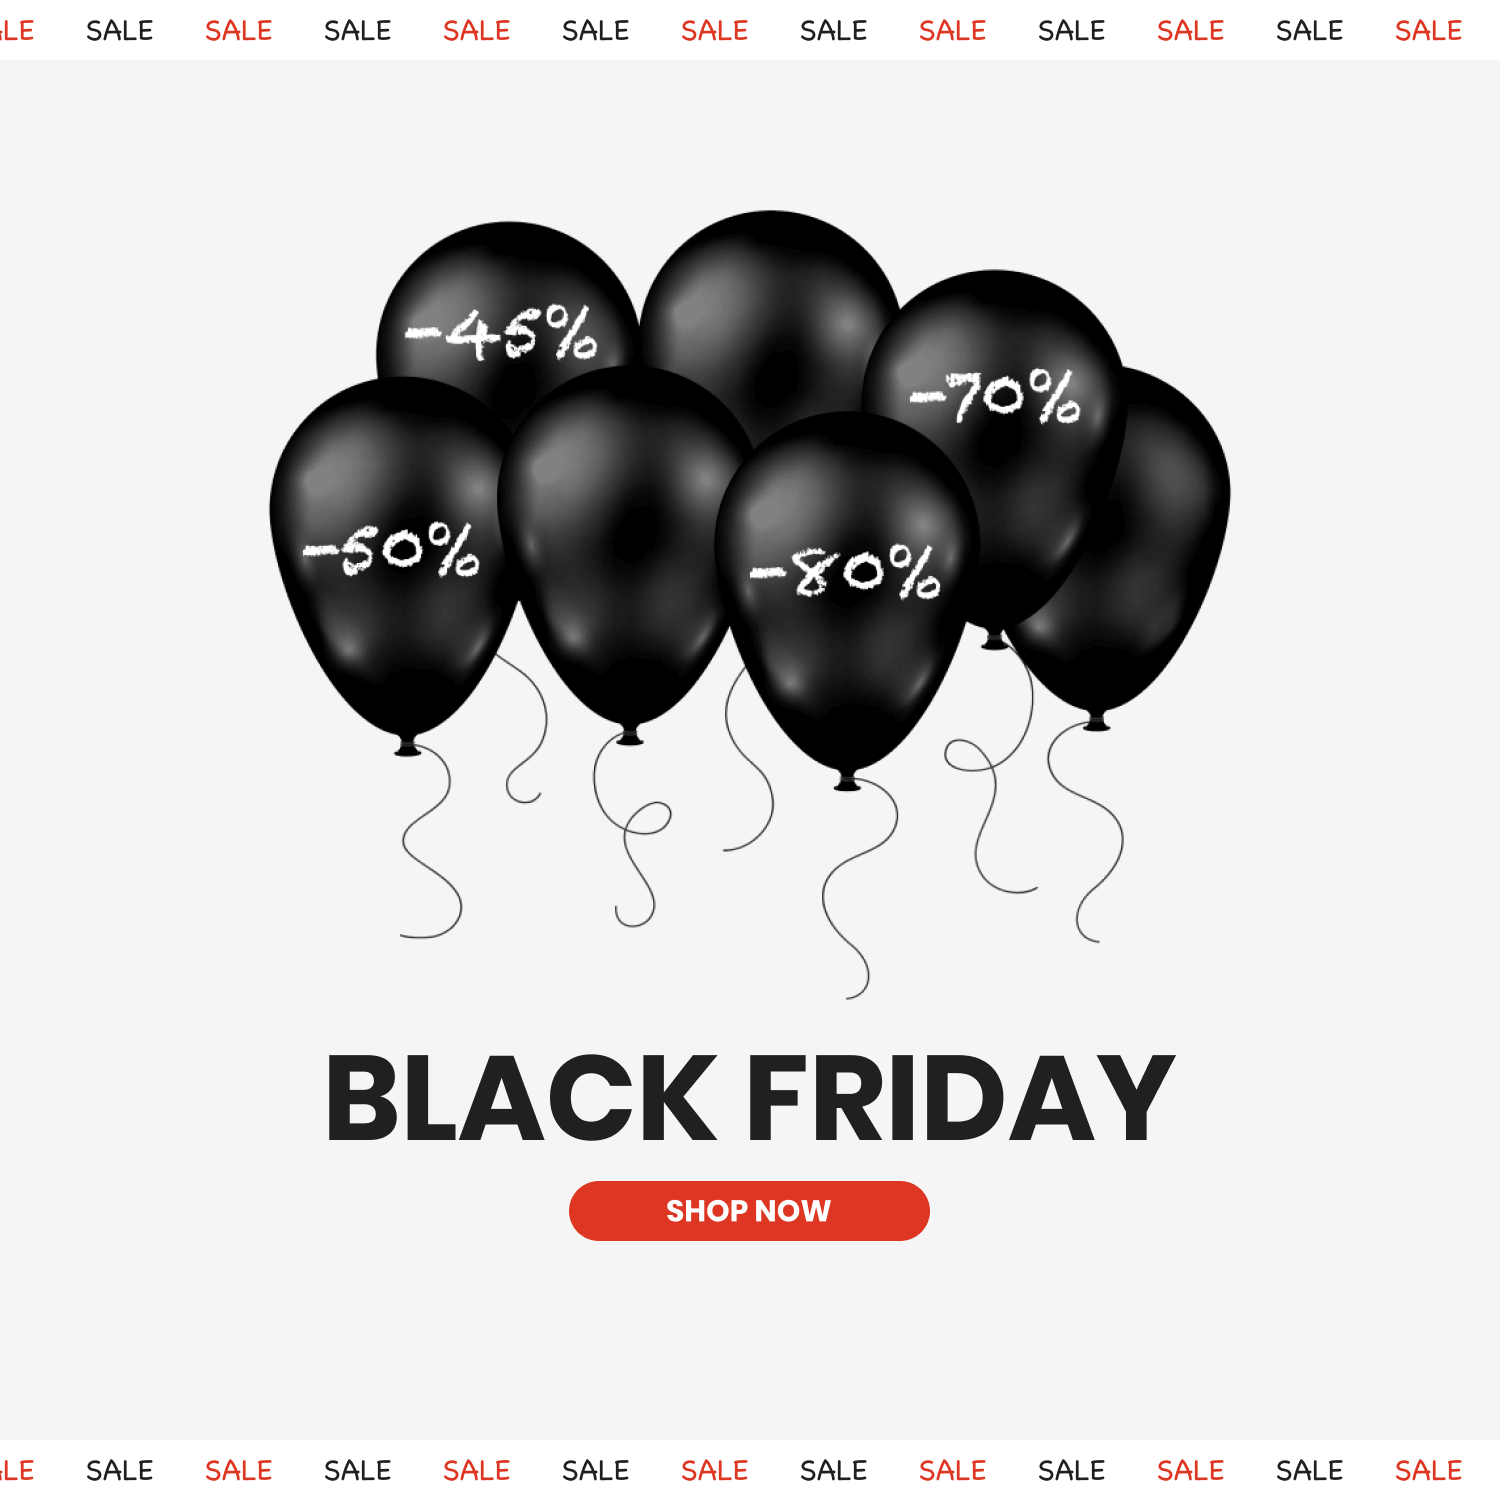 Free White Black Friday Social Media Promo Pack cover image.